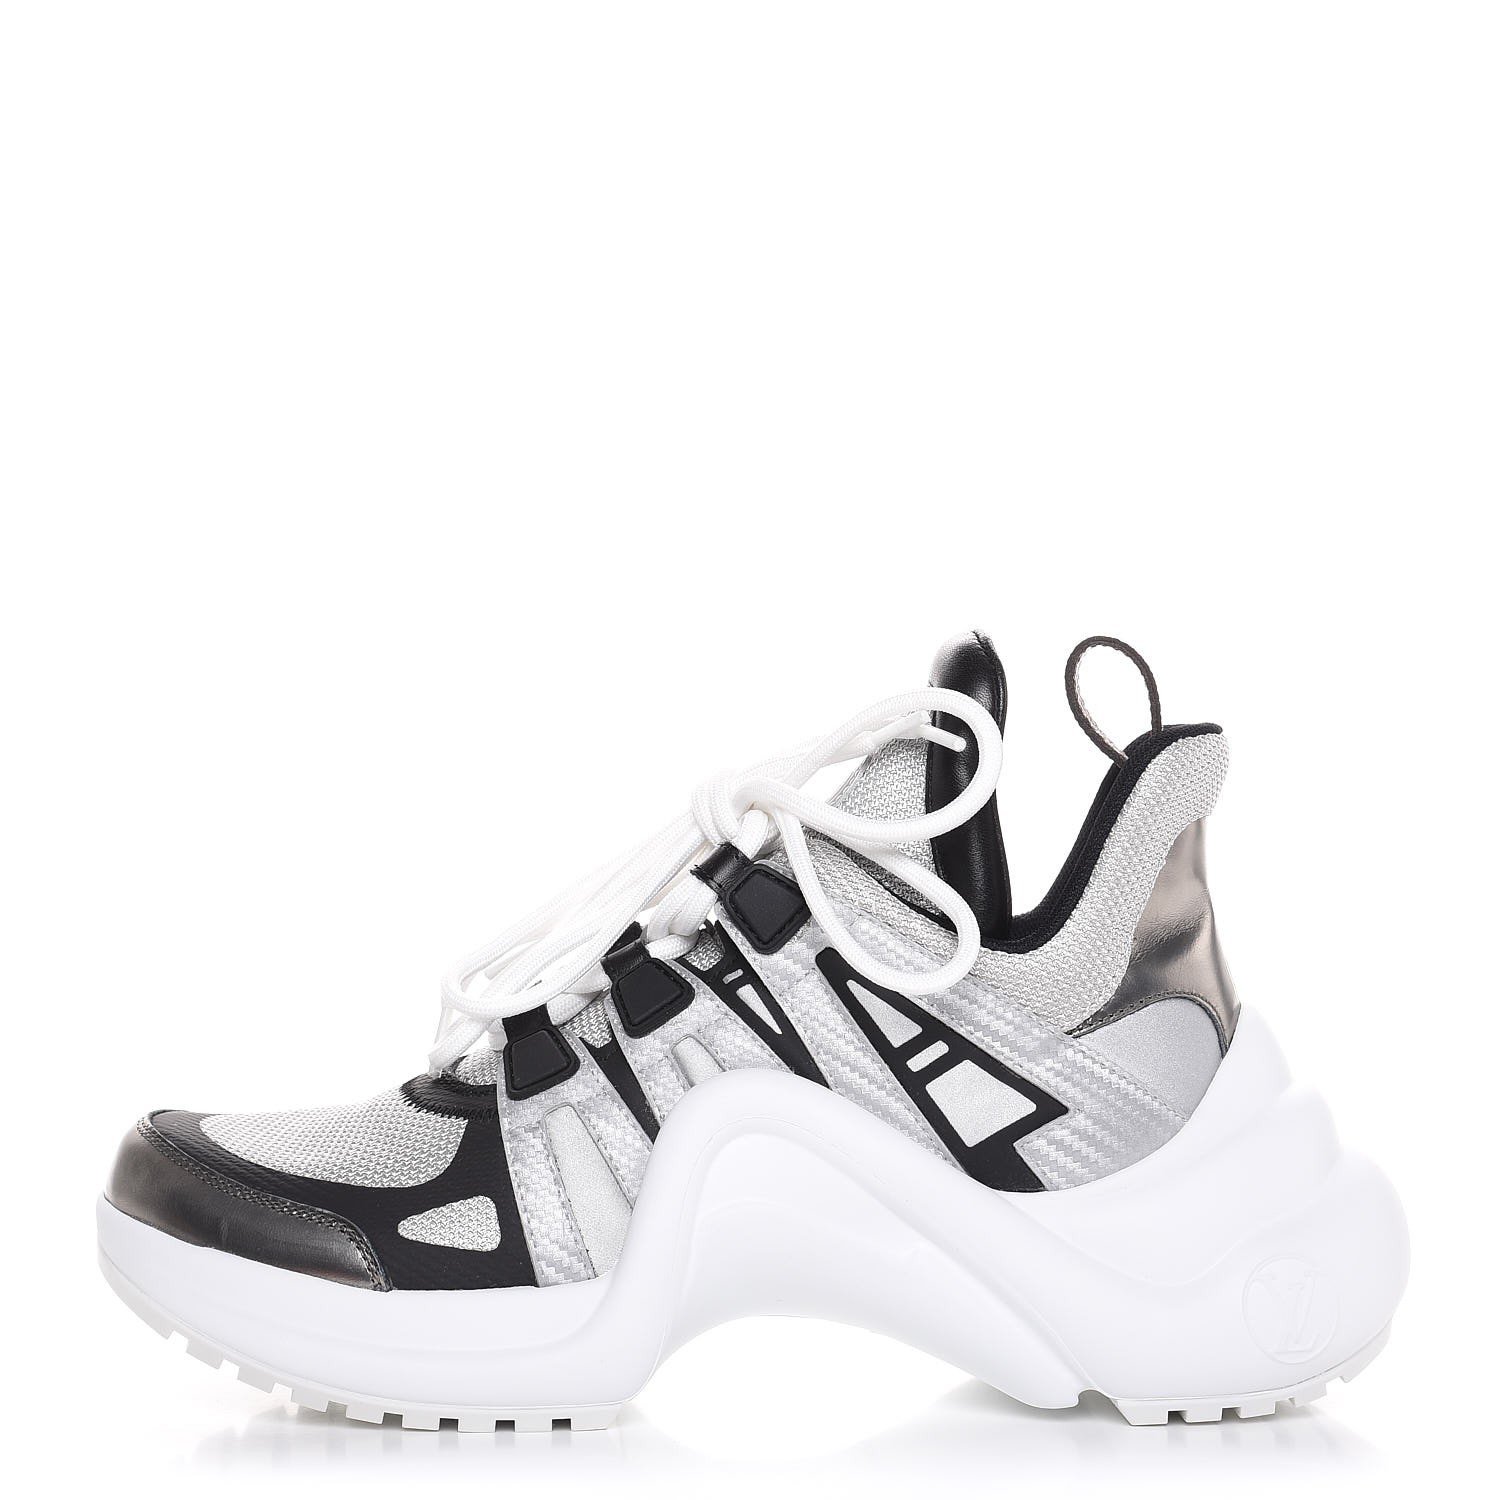 LOUIS VUITTON Calfskin Technical Nylon LV Archlight Sneaker 37 White 284531